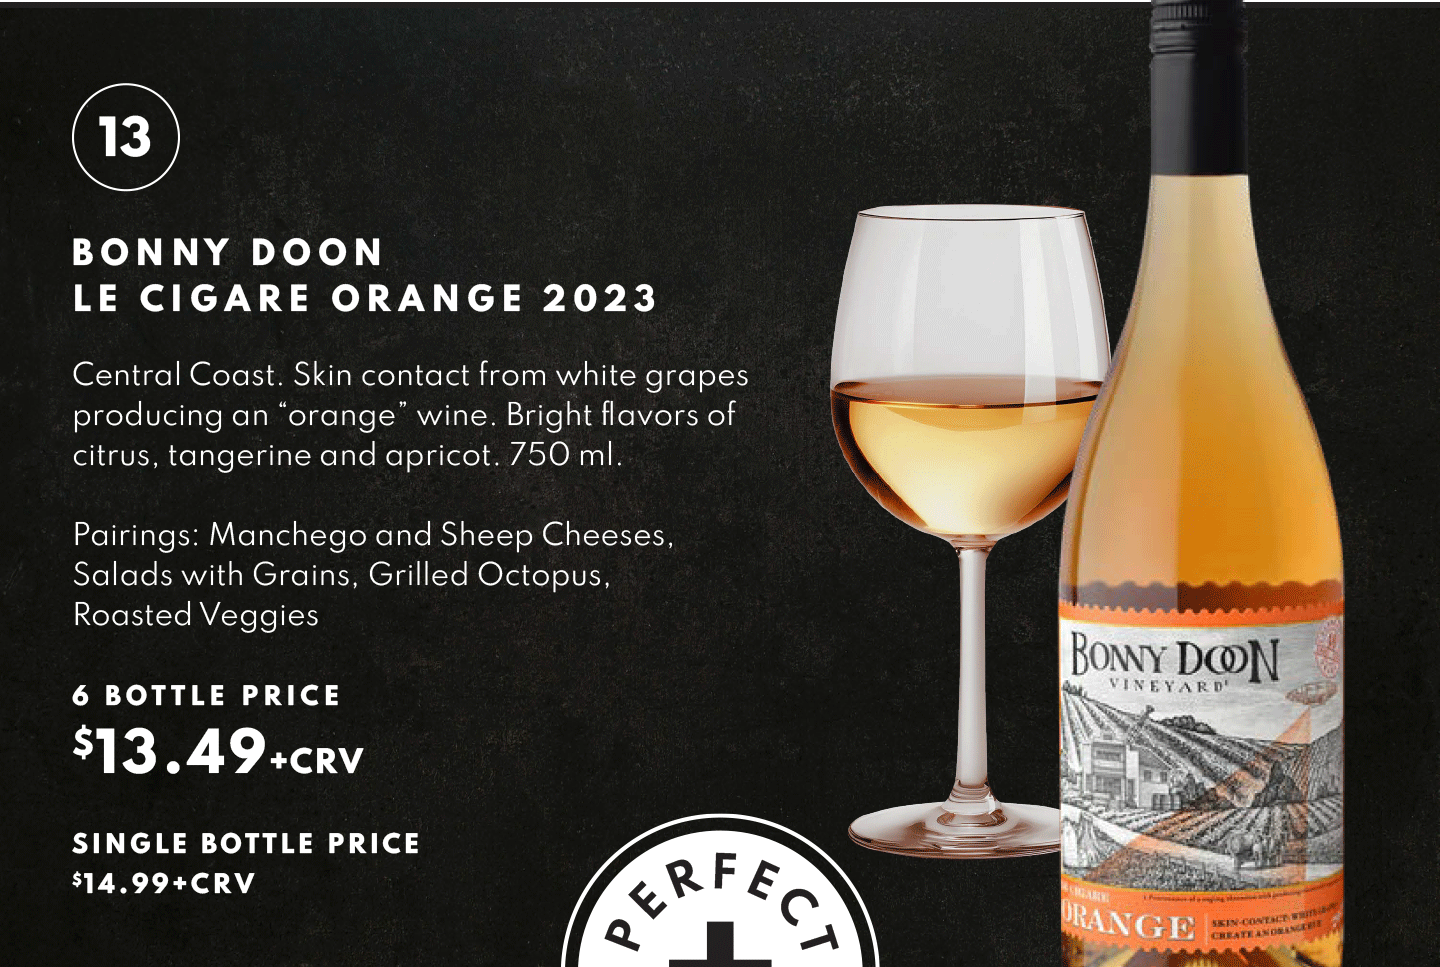 Bonny Doon Le Cigare Orange 2023 $13.49, 6 bottle price